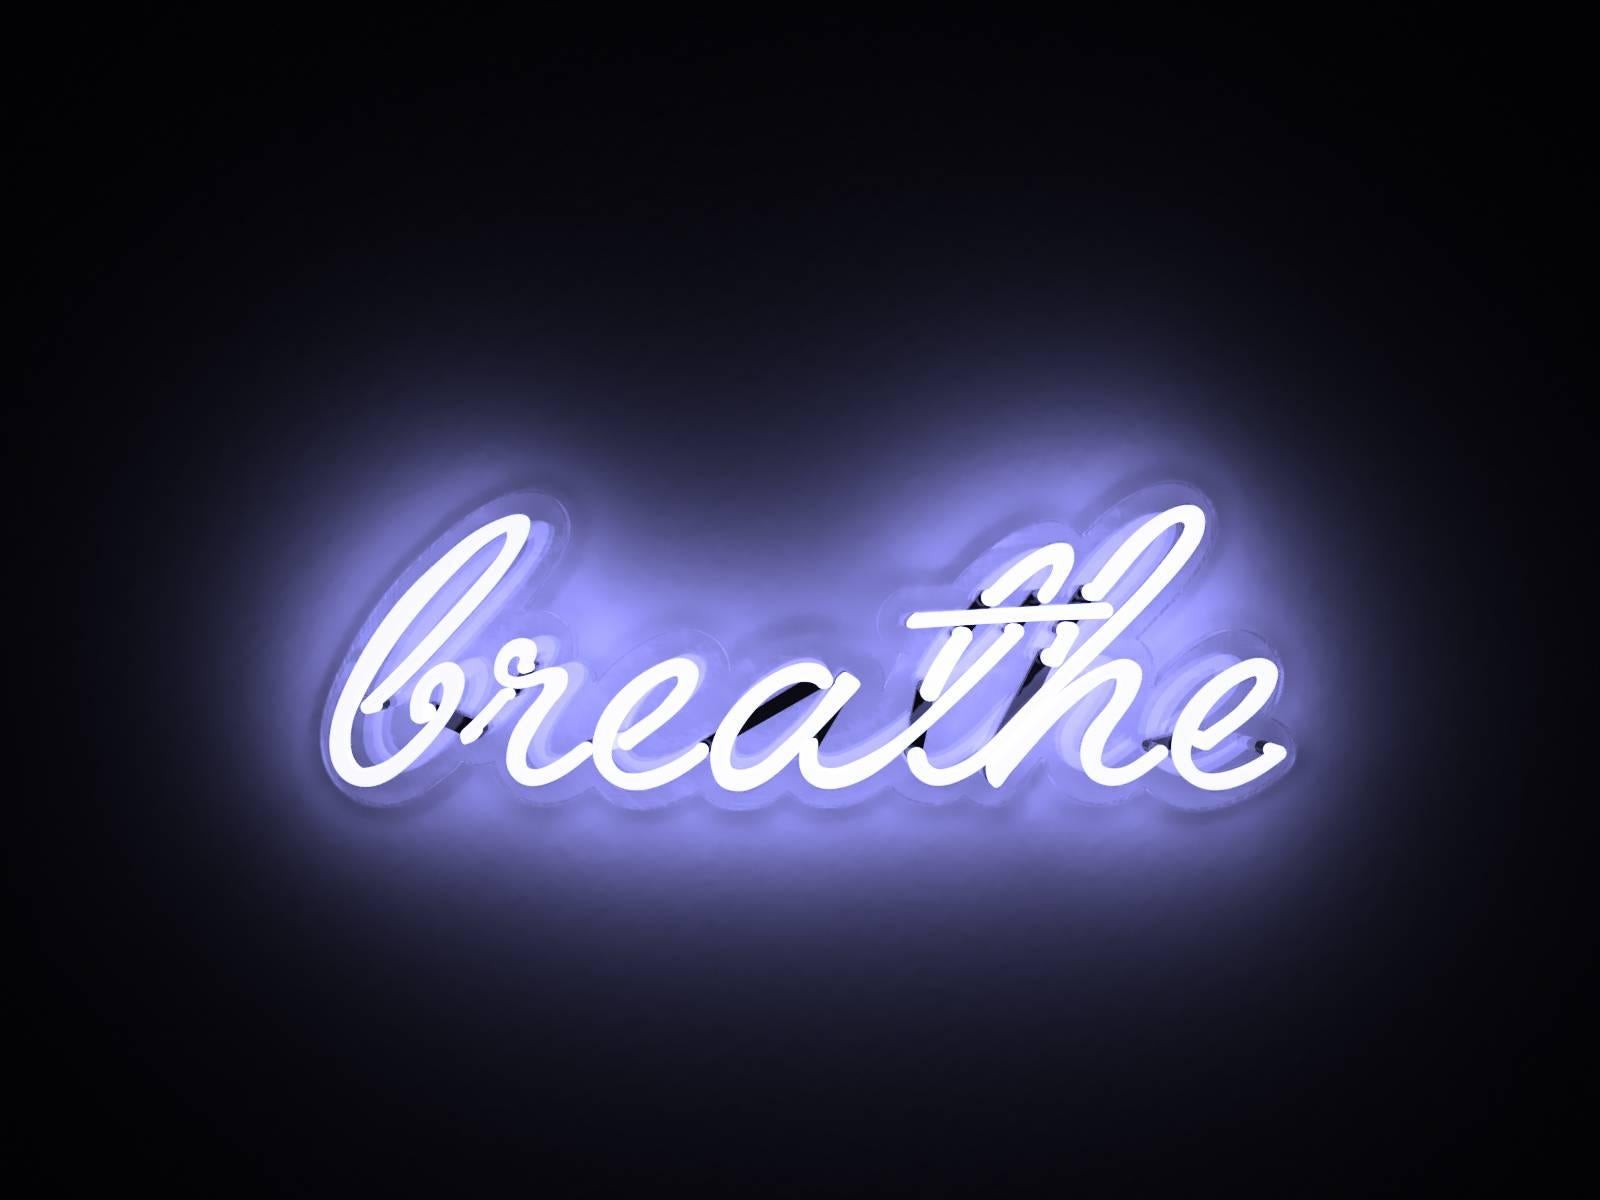 breathe - neonfarbene Kunstwerke